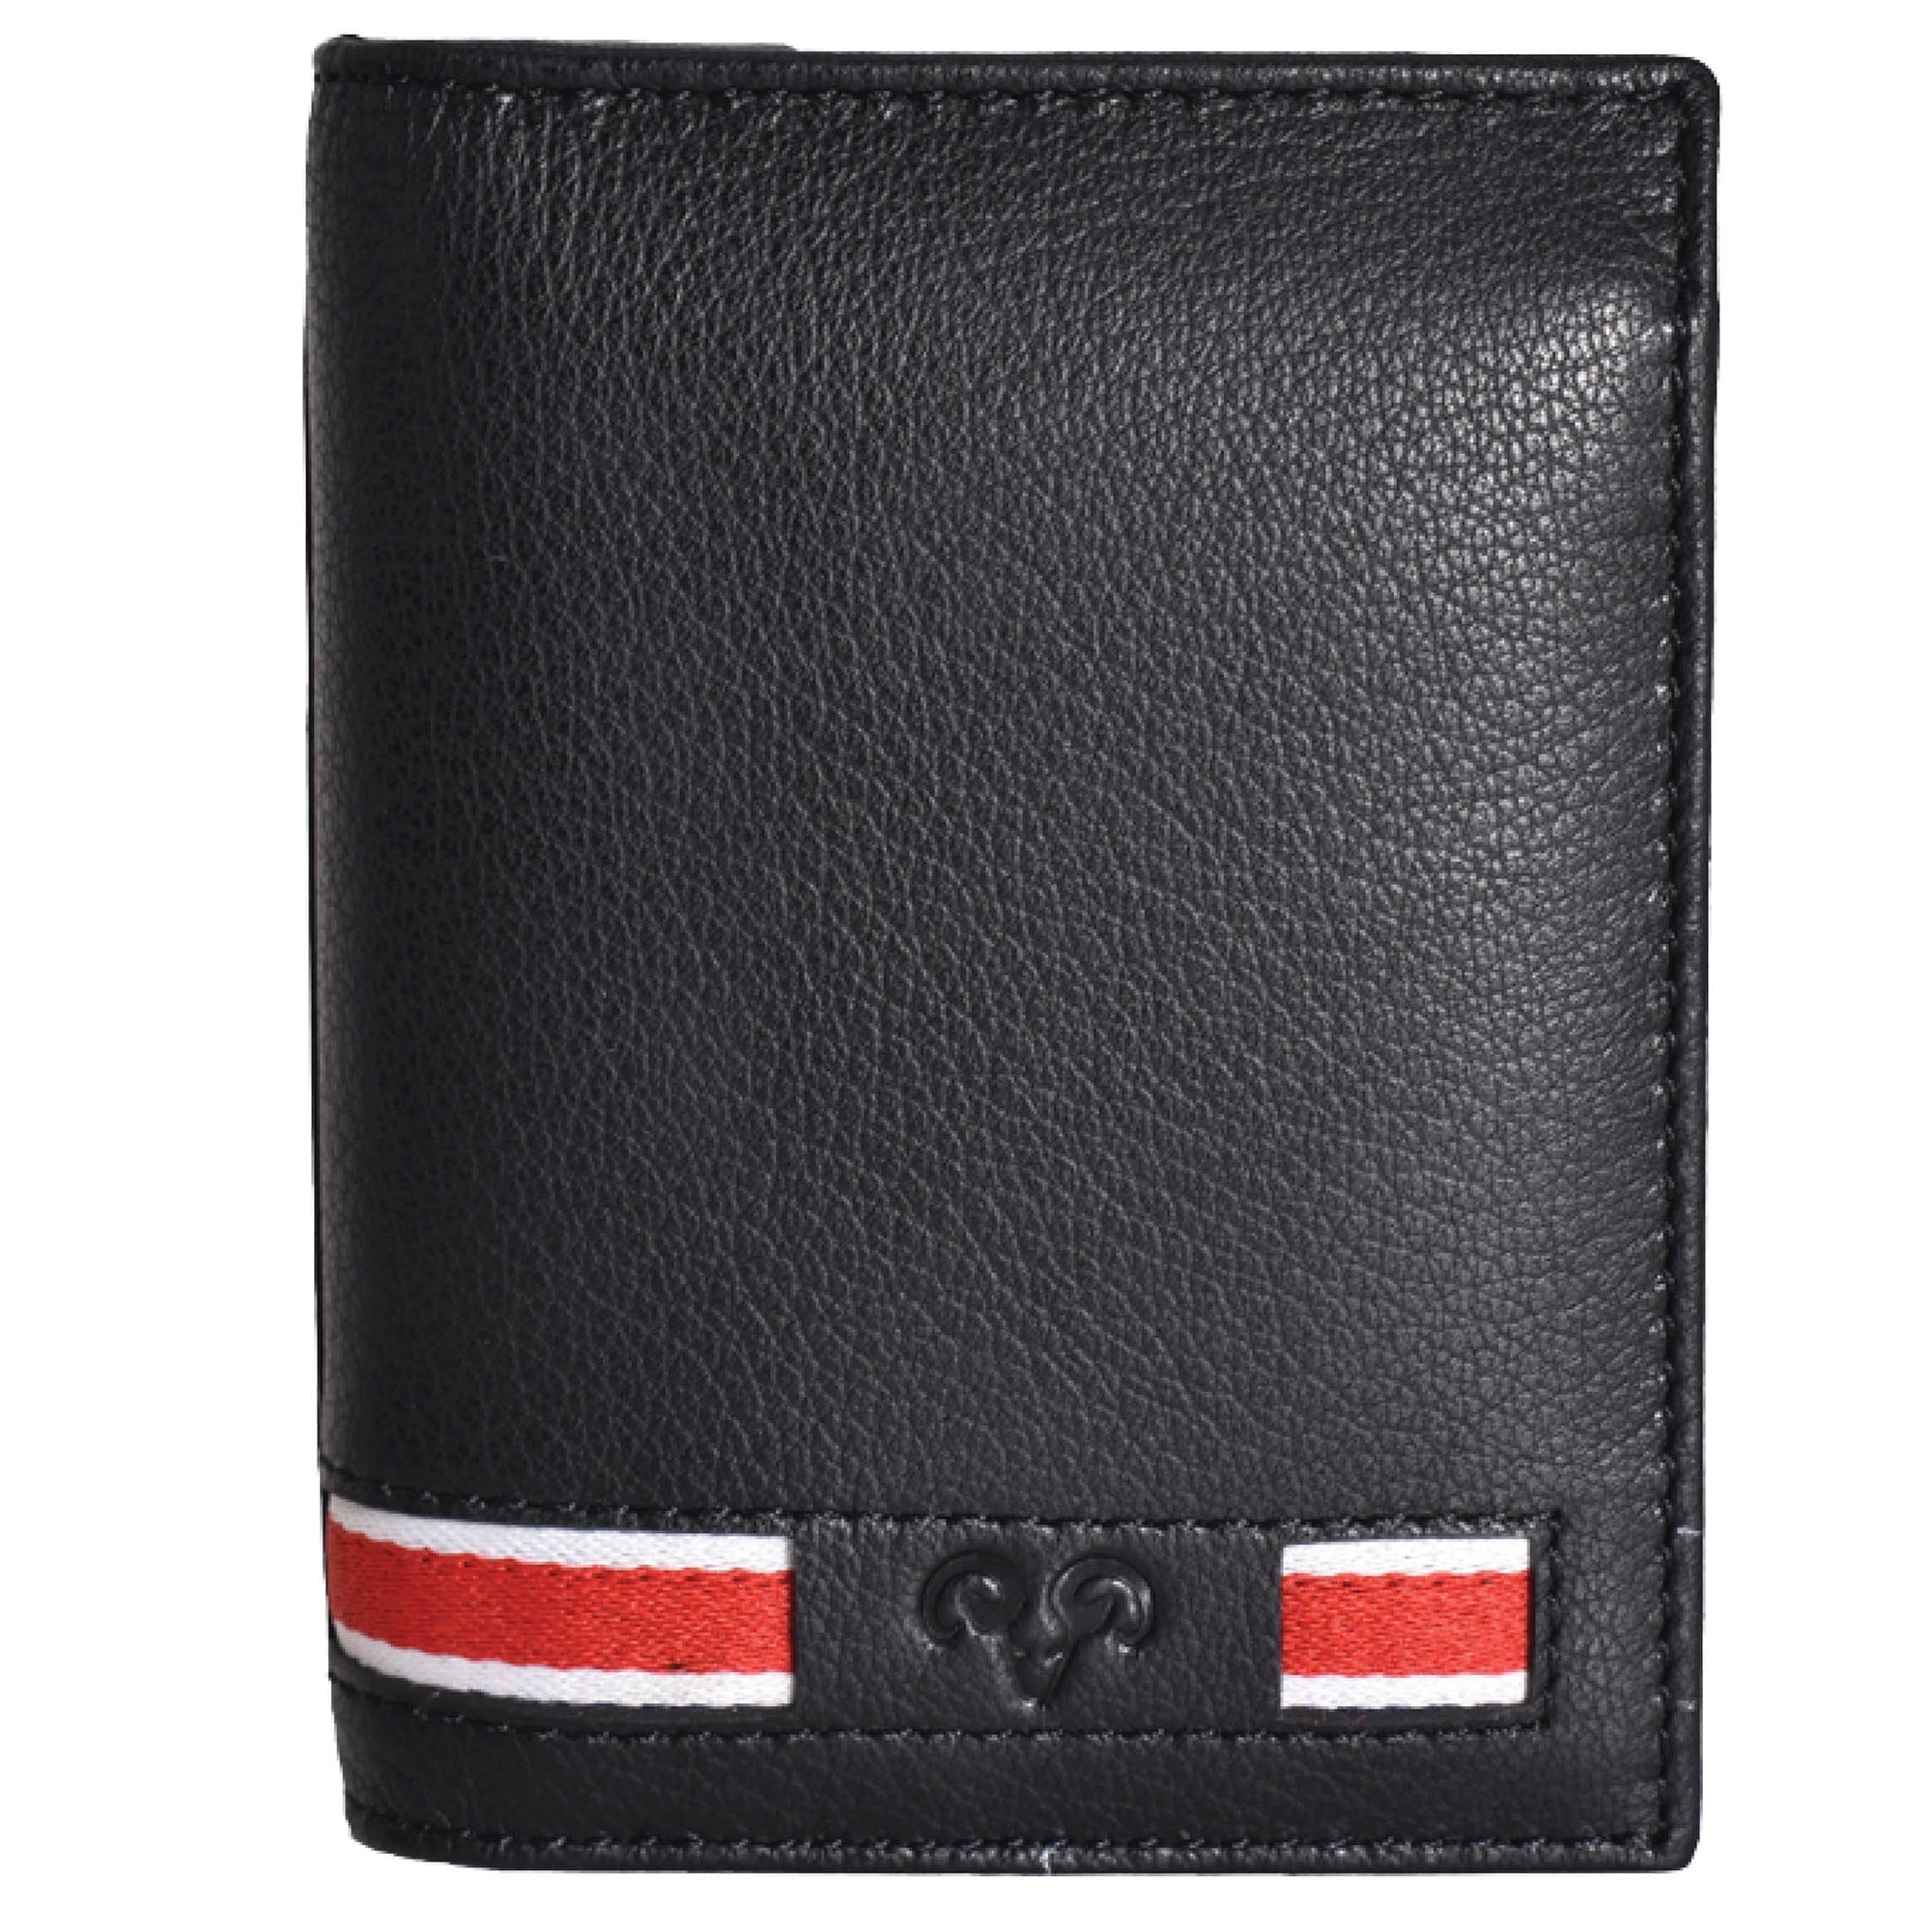 title:Jack Abrahams Bi-Fold RFID Wallet With Flip ID Window Pocket;color:Black Multi